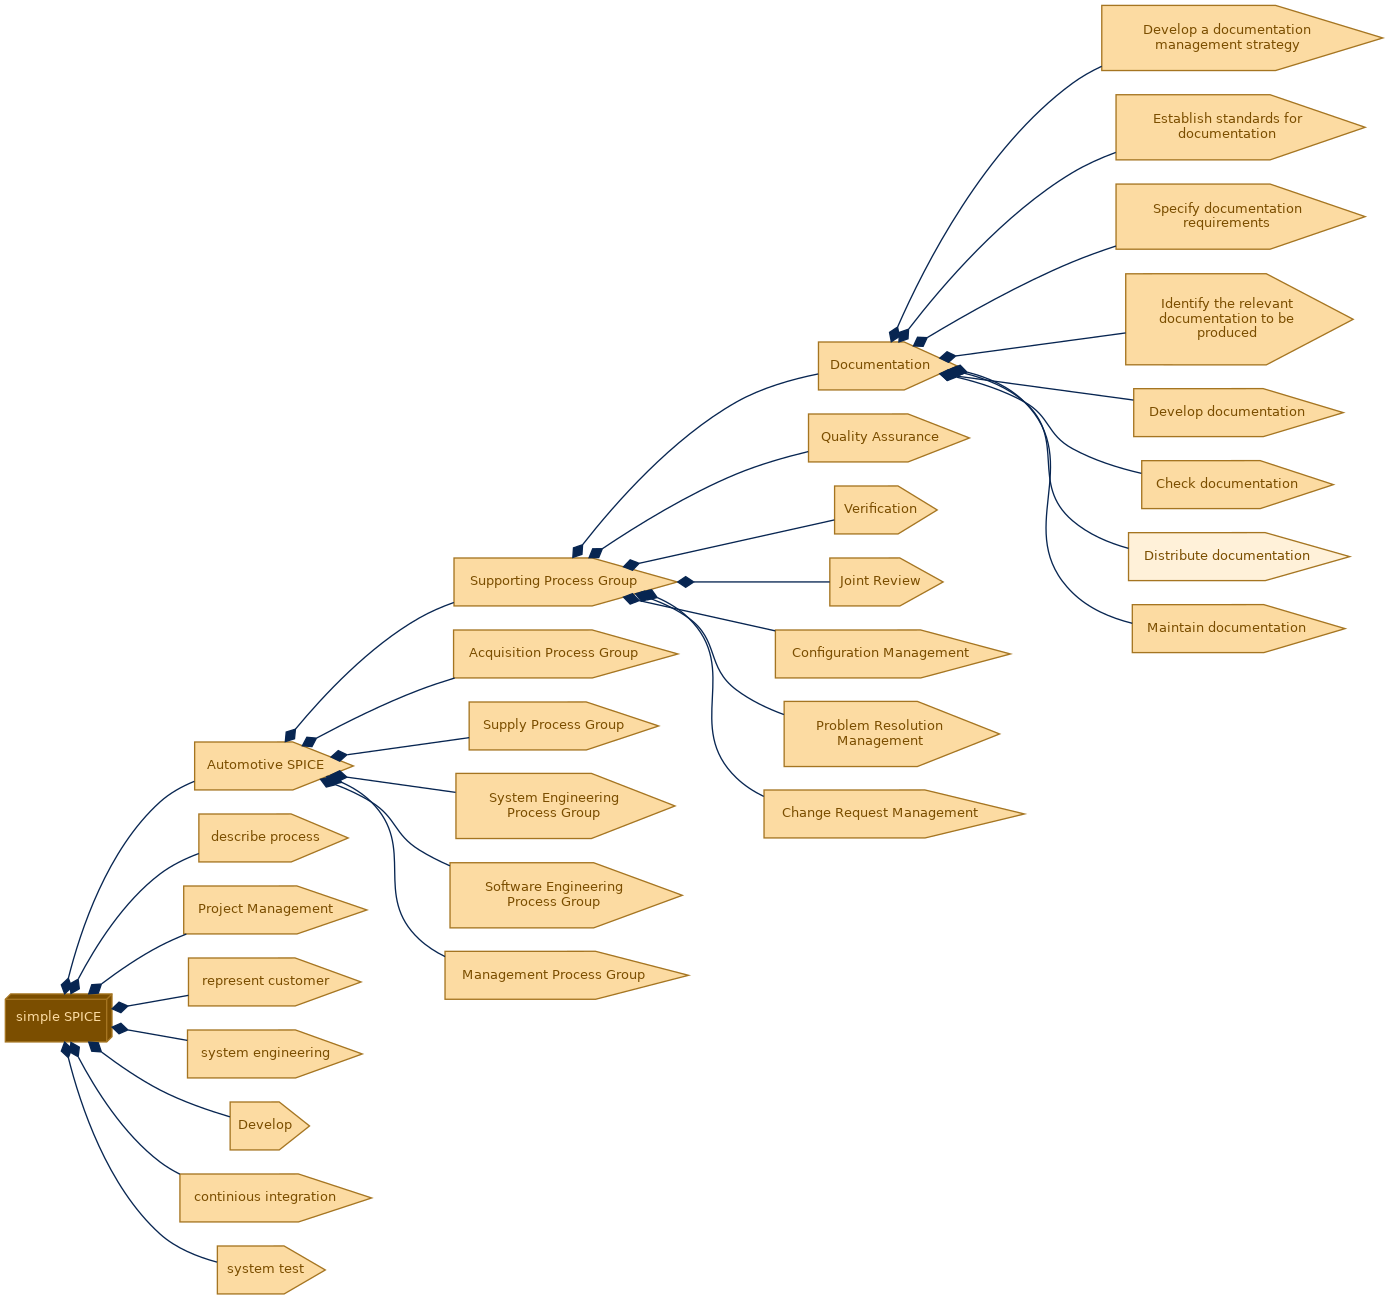 spem diagram of the activity breakdown: Distribute documentation